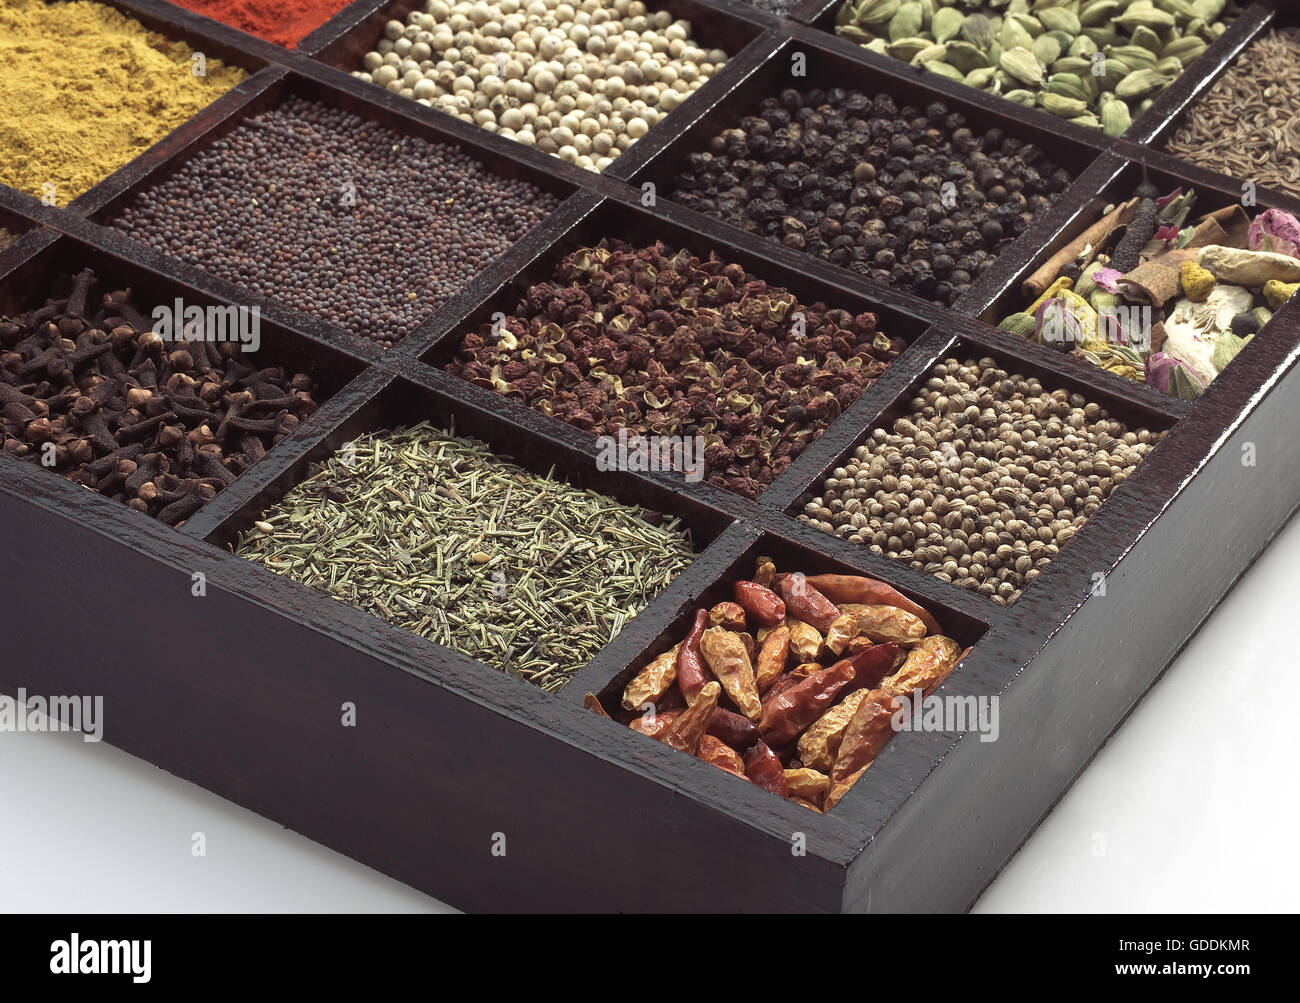 Spices Box Stock Photo